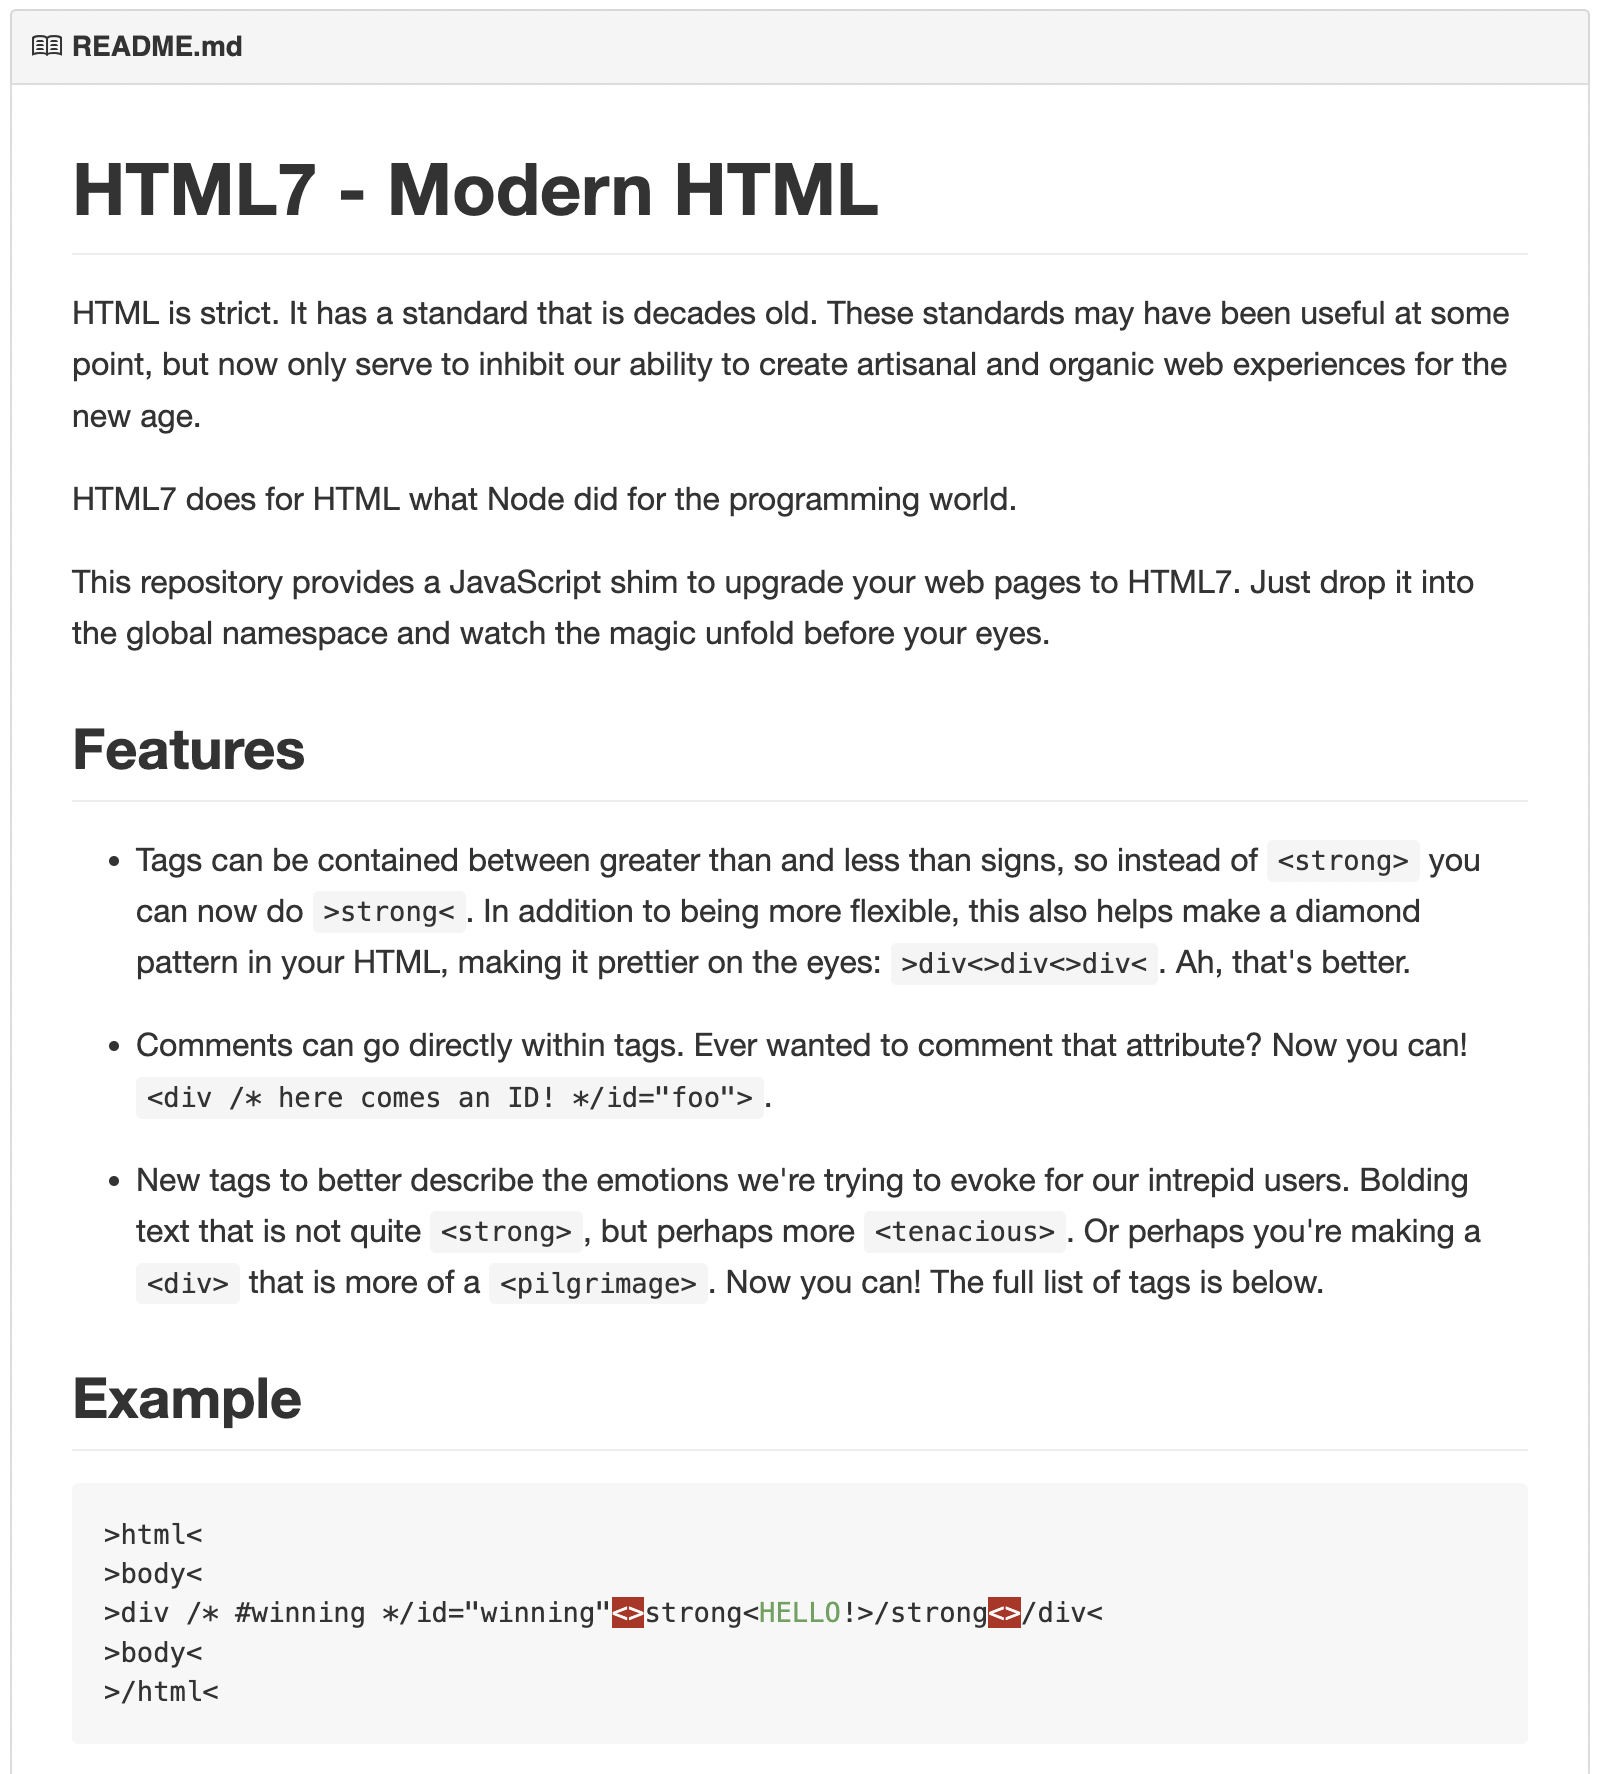 "HTML7 - Modern HTML"